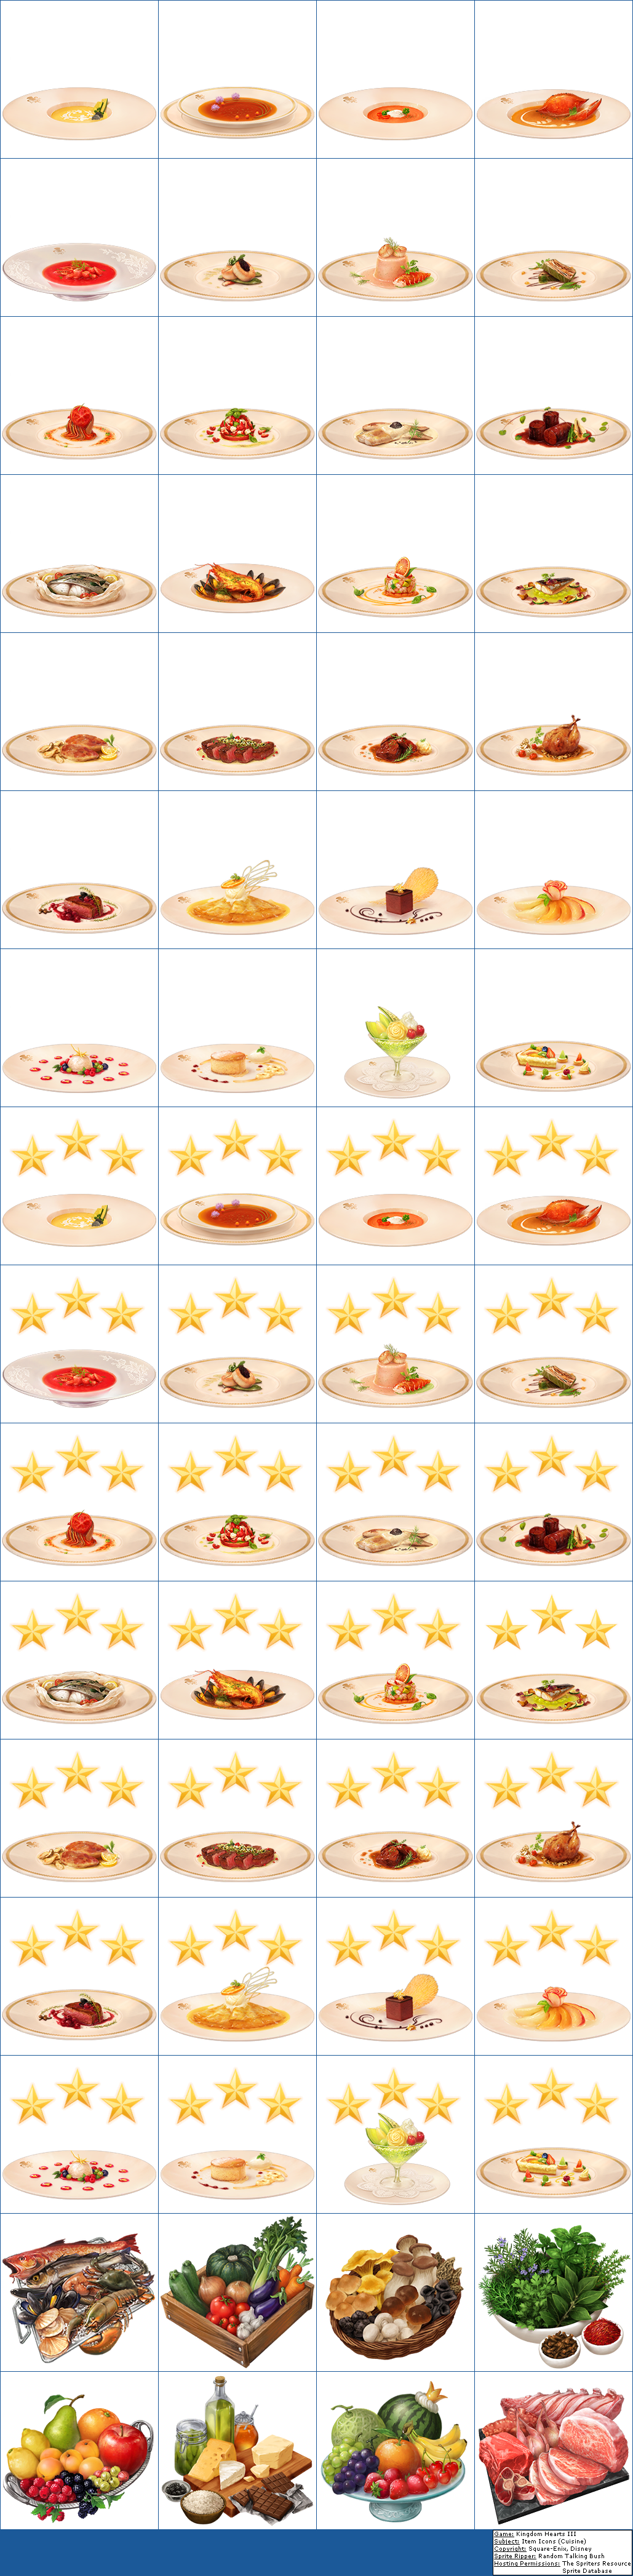 Kingdom Hearts 3 - Item Icons (Cuisine)